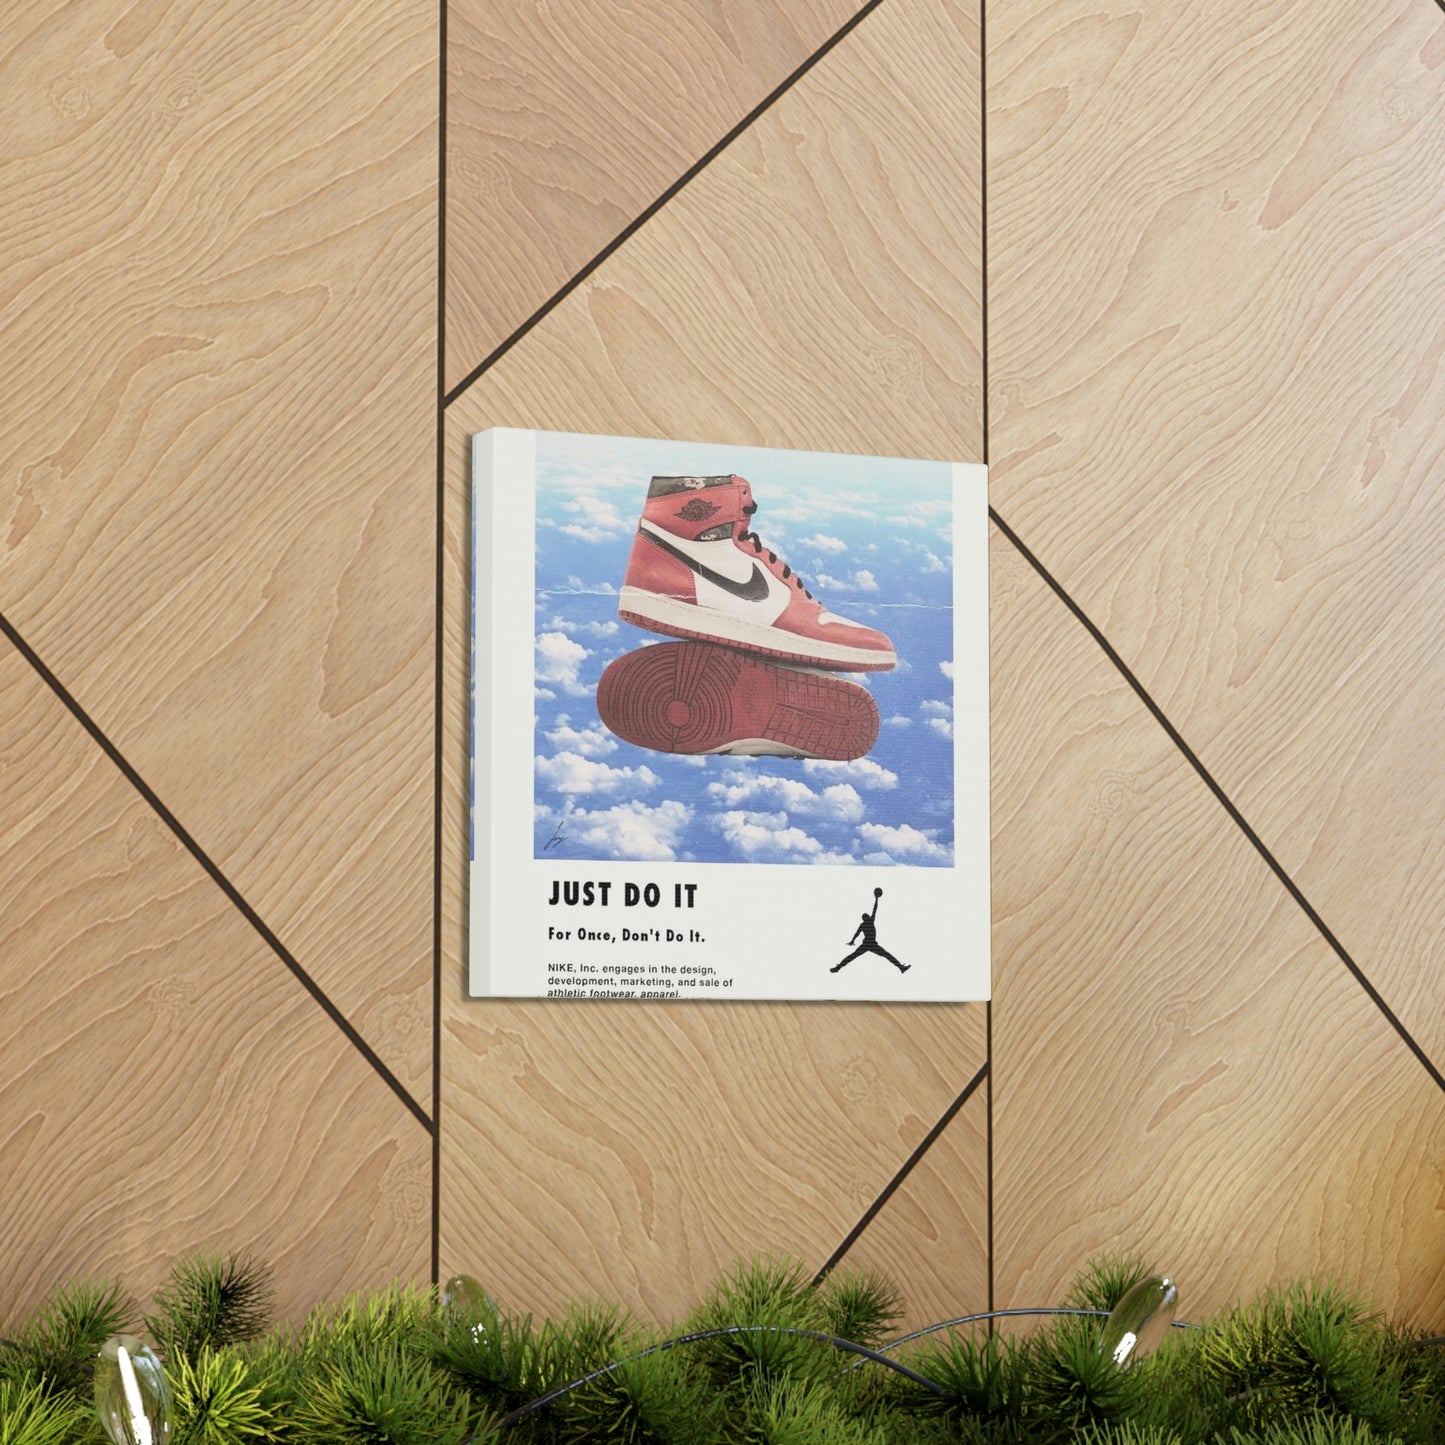 Nike Ad Gallery Wrap